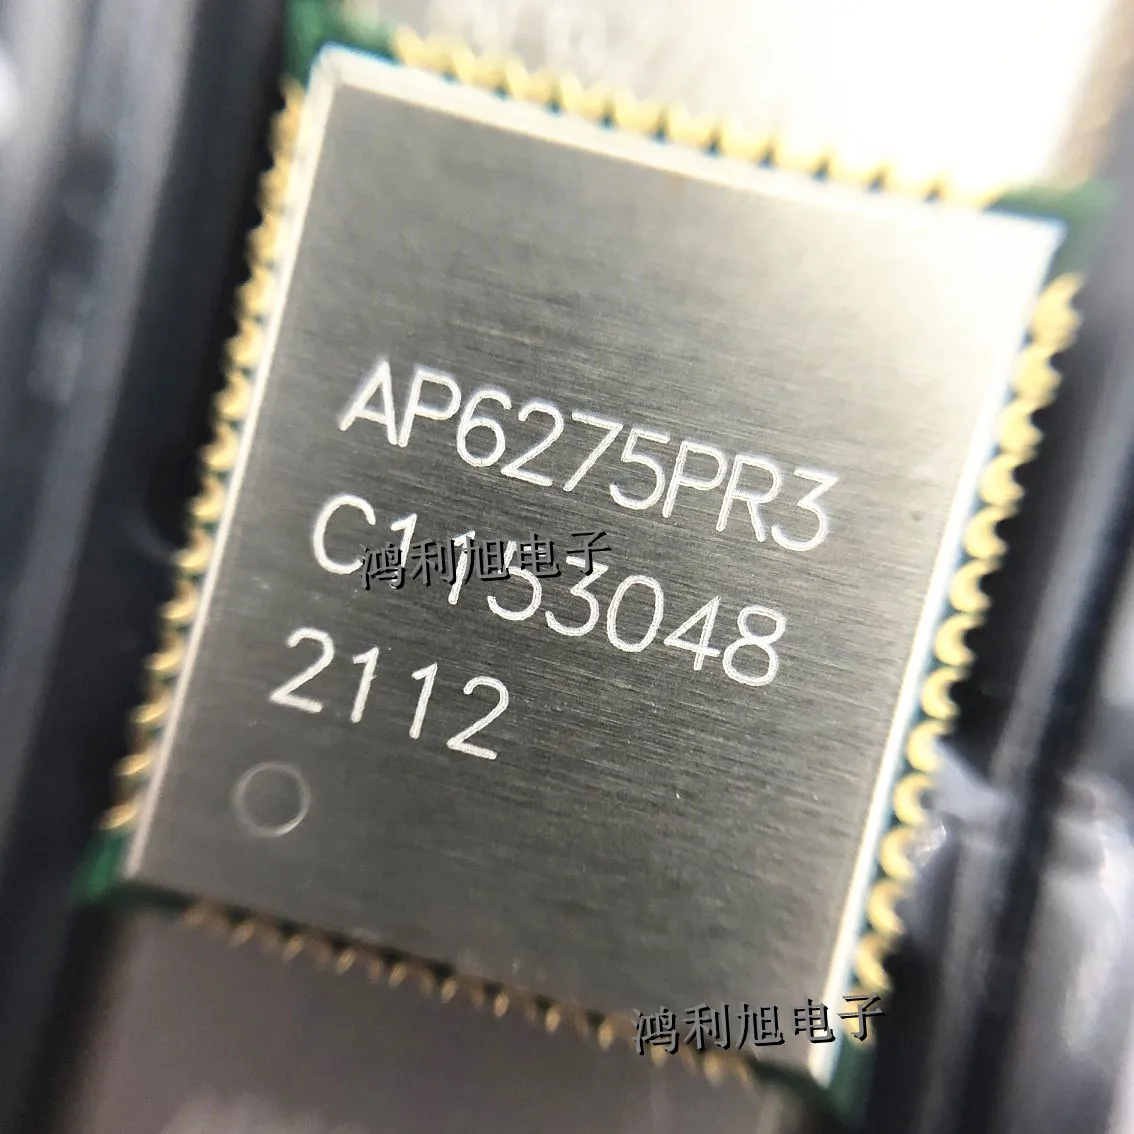 

Wi-Fi модуль AP6275PR3, 2,4 ГГц, 14 дБм, UART 802.11b/g/n, рабочая температура,-30 ℃ ~ + 85 ℃, 1 шт./партия